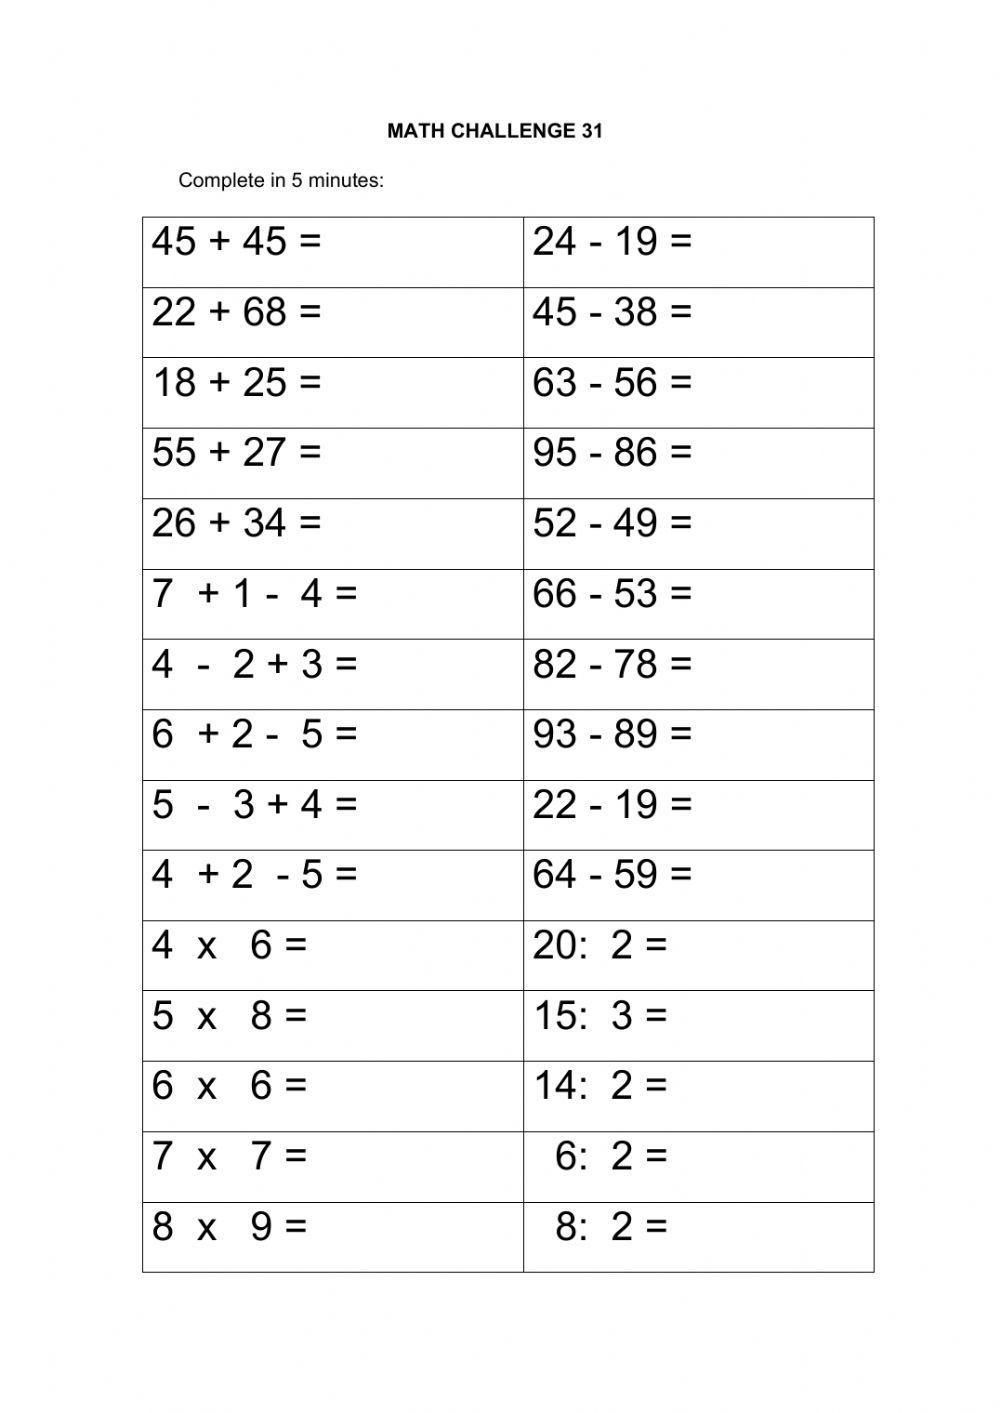 Math Challenge 31